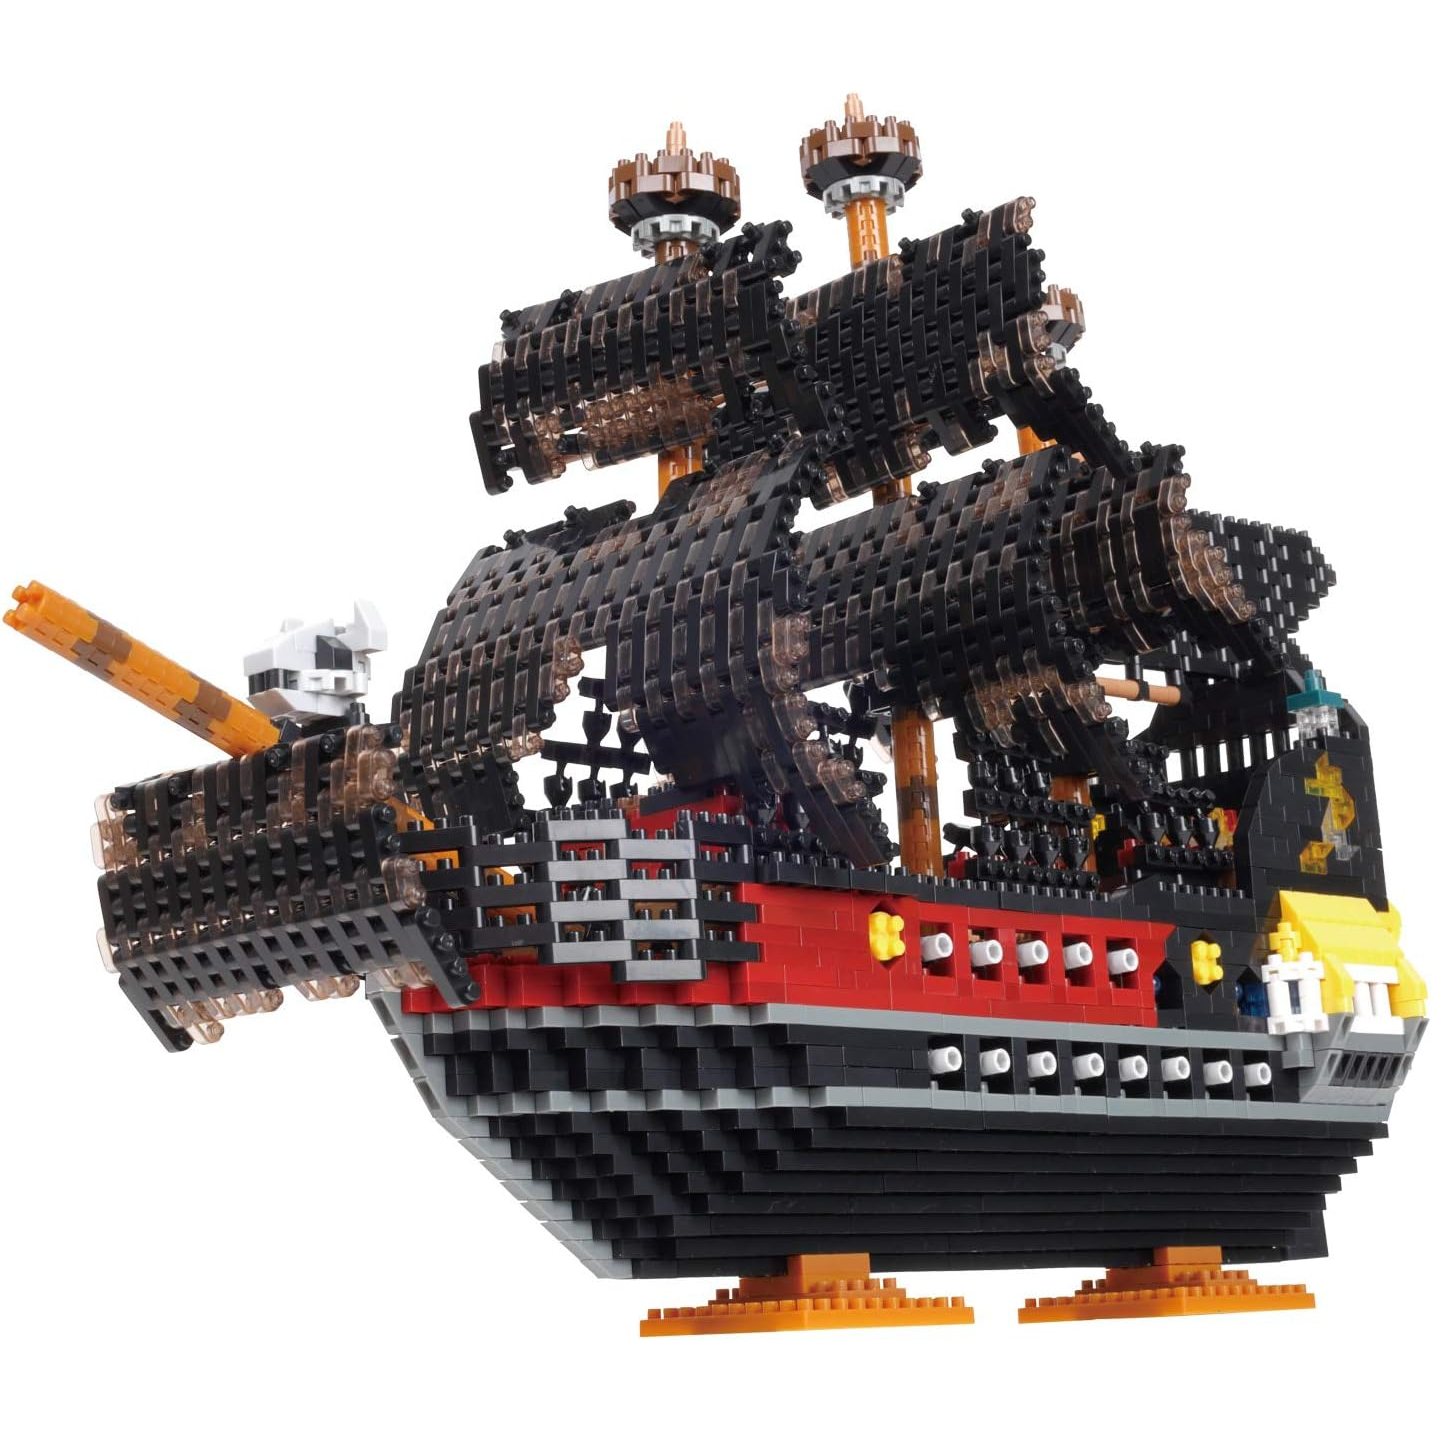 Nanoblock 22004 Pirate Ship DX